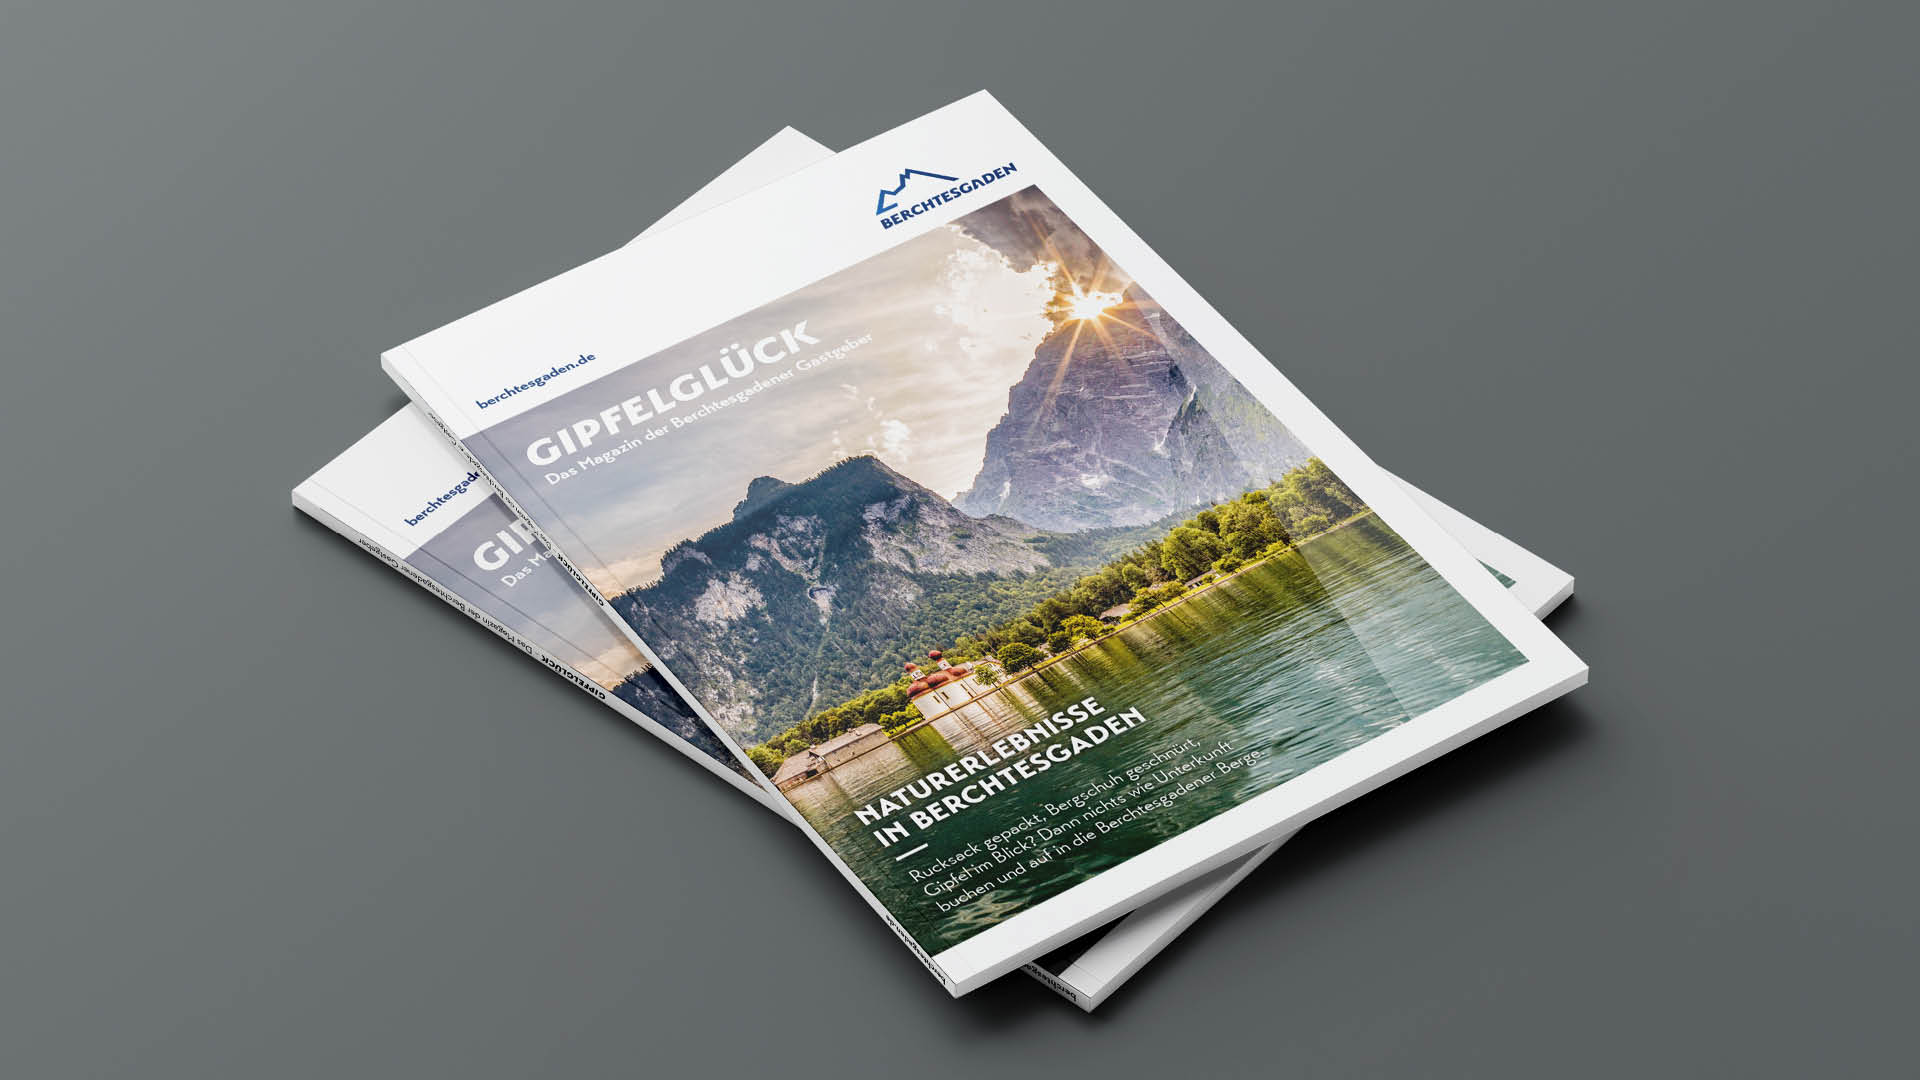 Bergerlebnis Berchtesgaden Gipfelglück Magazin